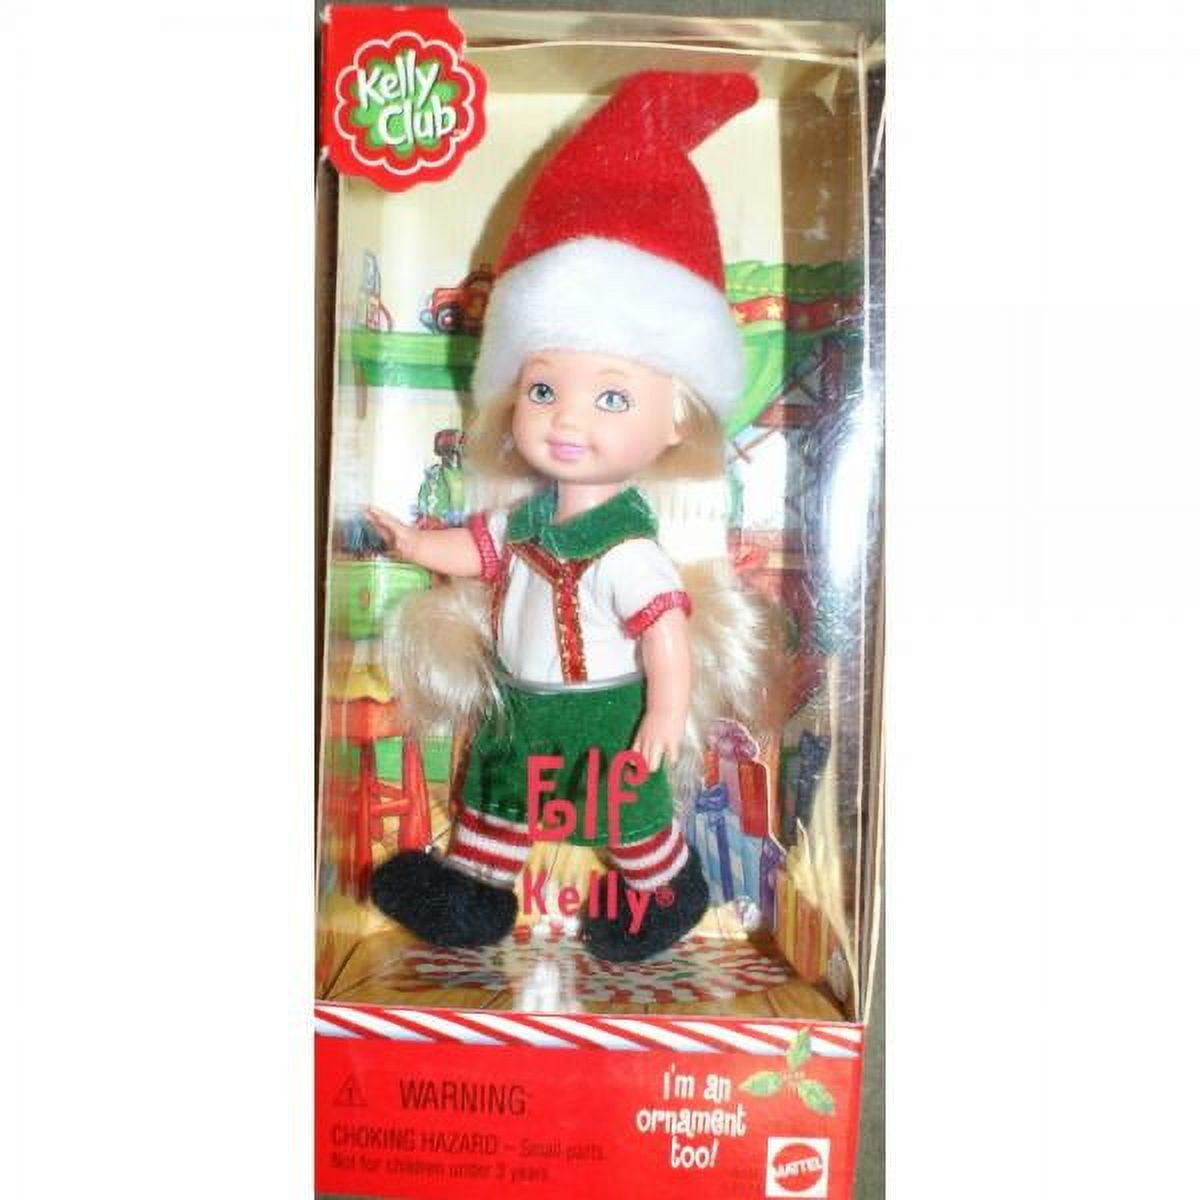 Barbie Kelly Club Christmas Elf Kelly doll ornament too - Walmart.com